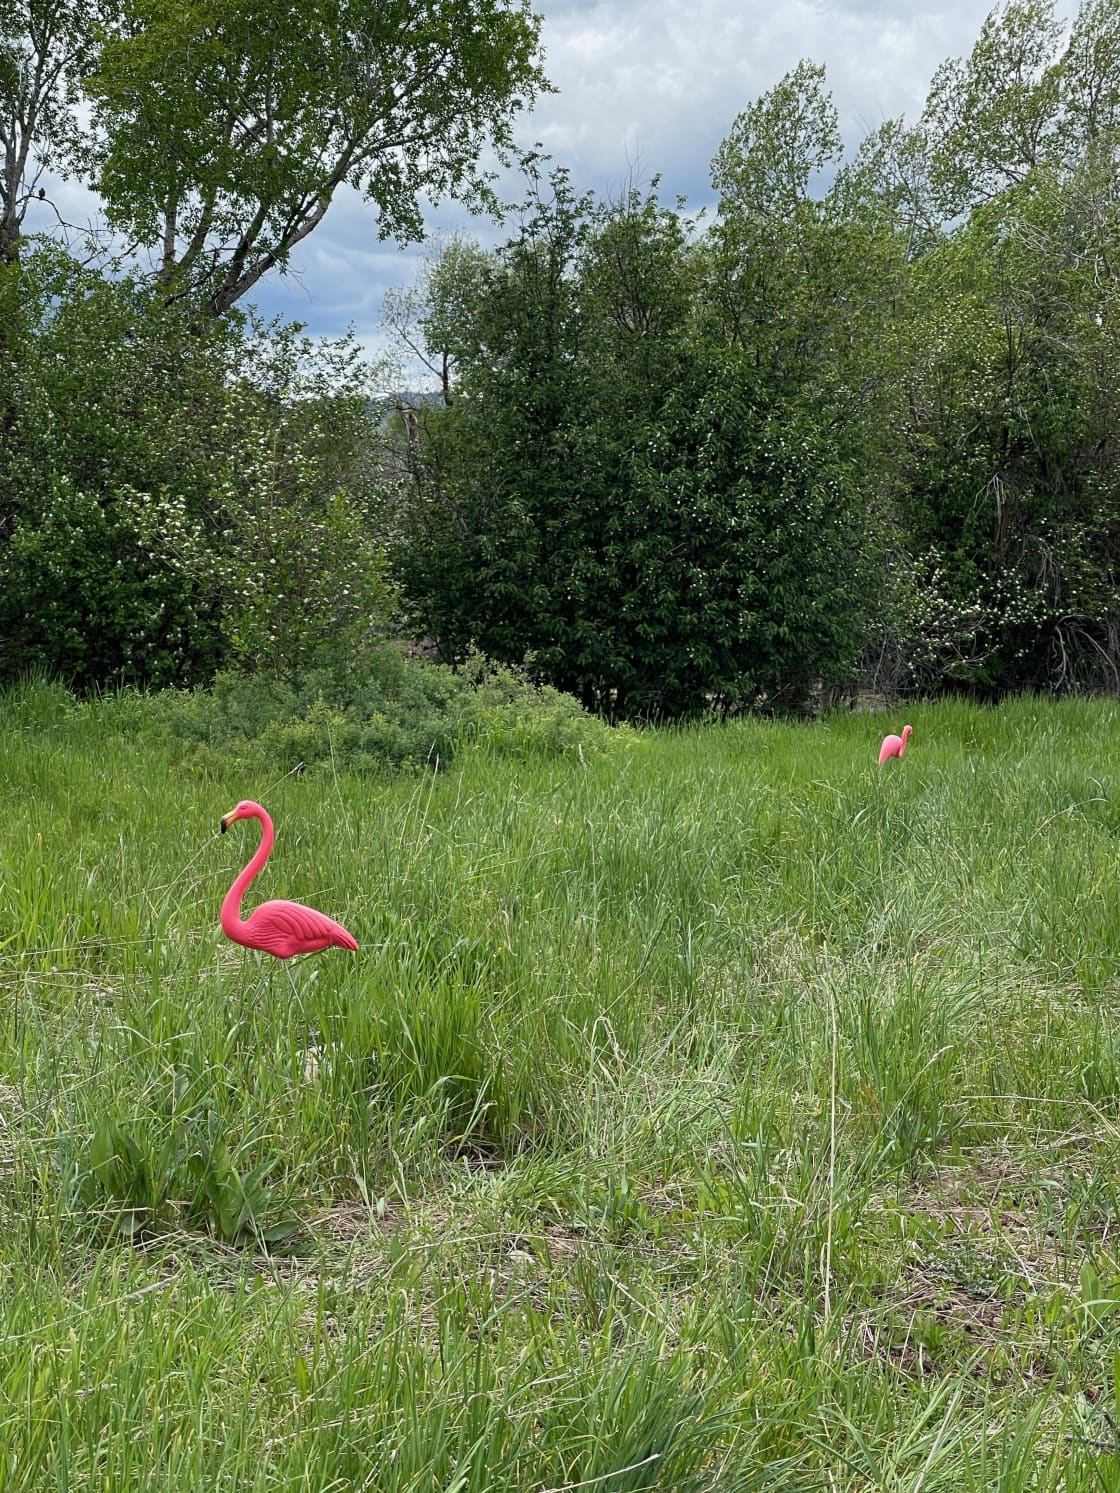 Please do not drive near the Flamingos.